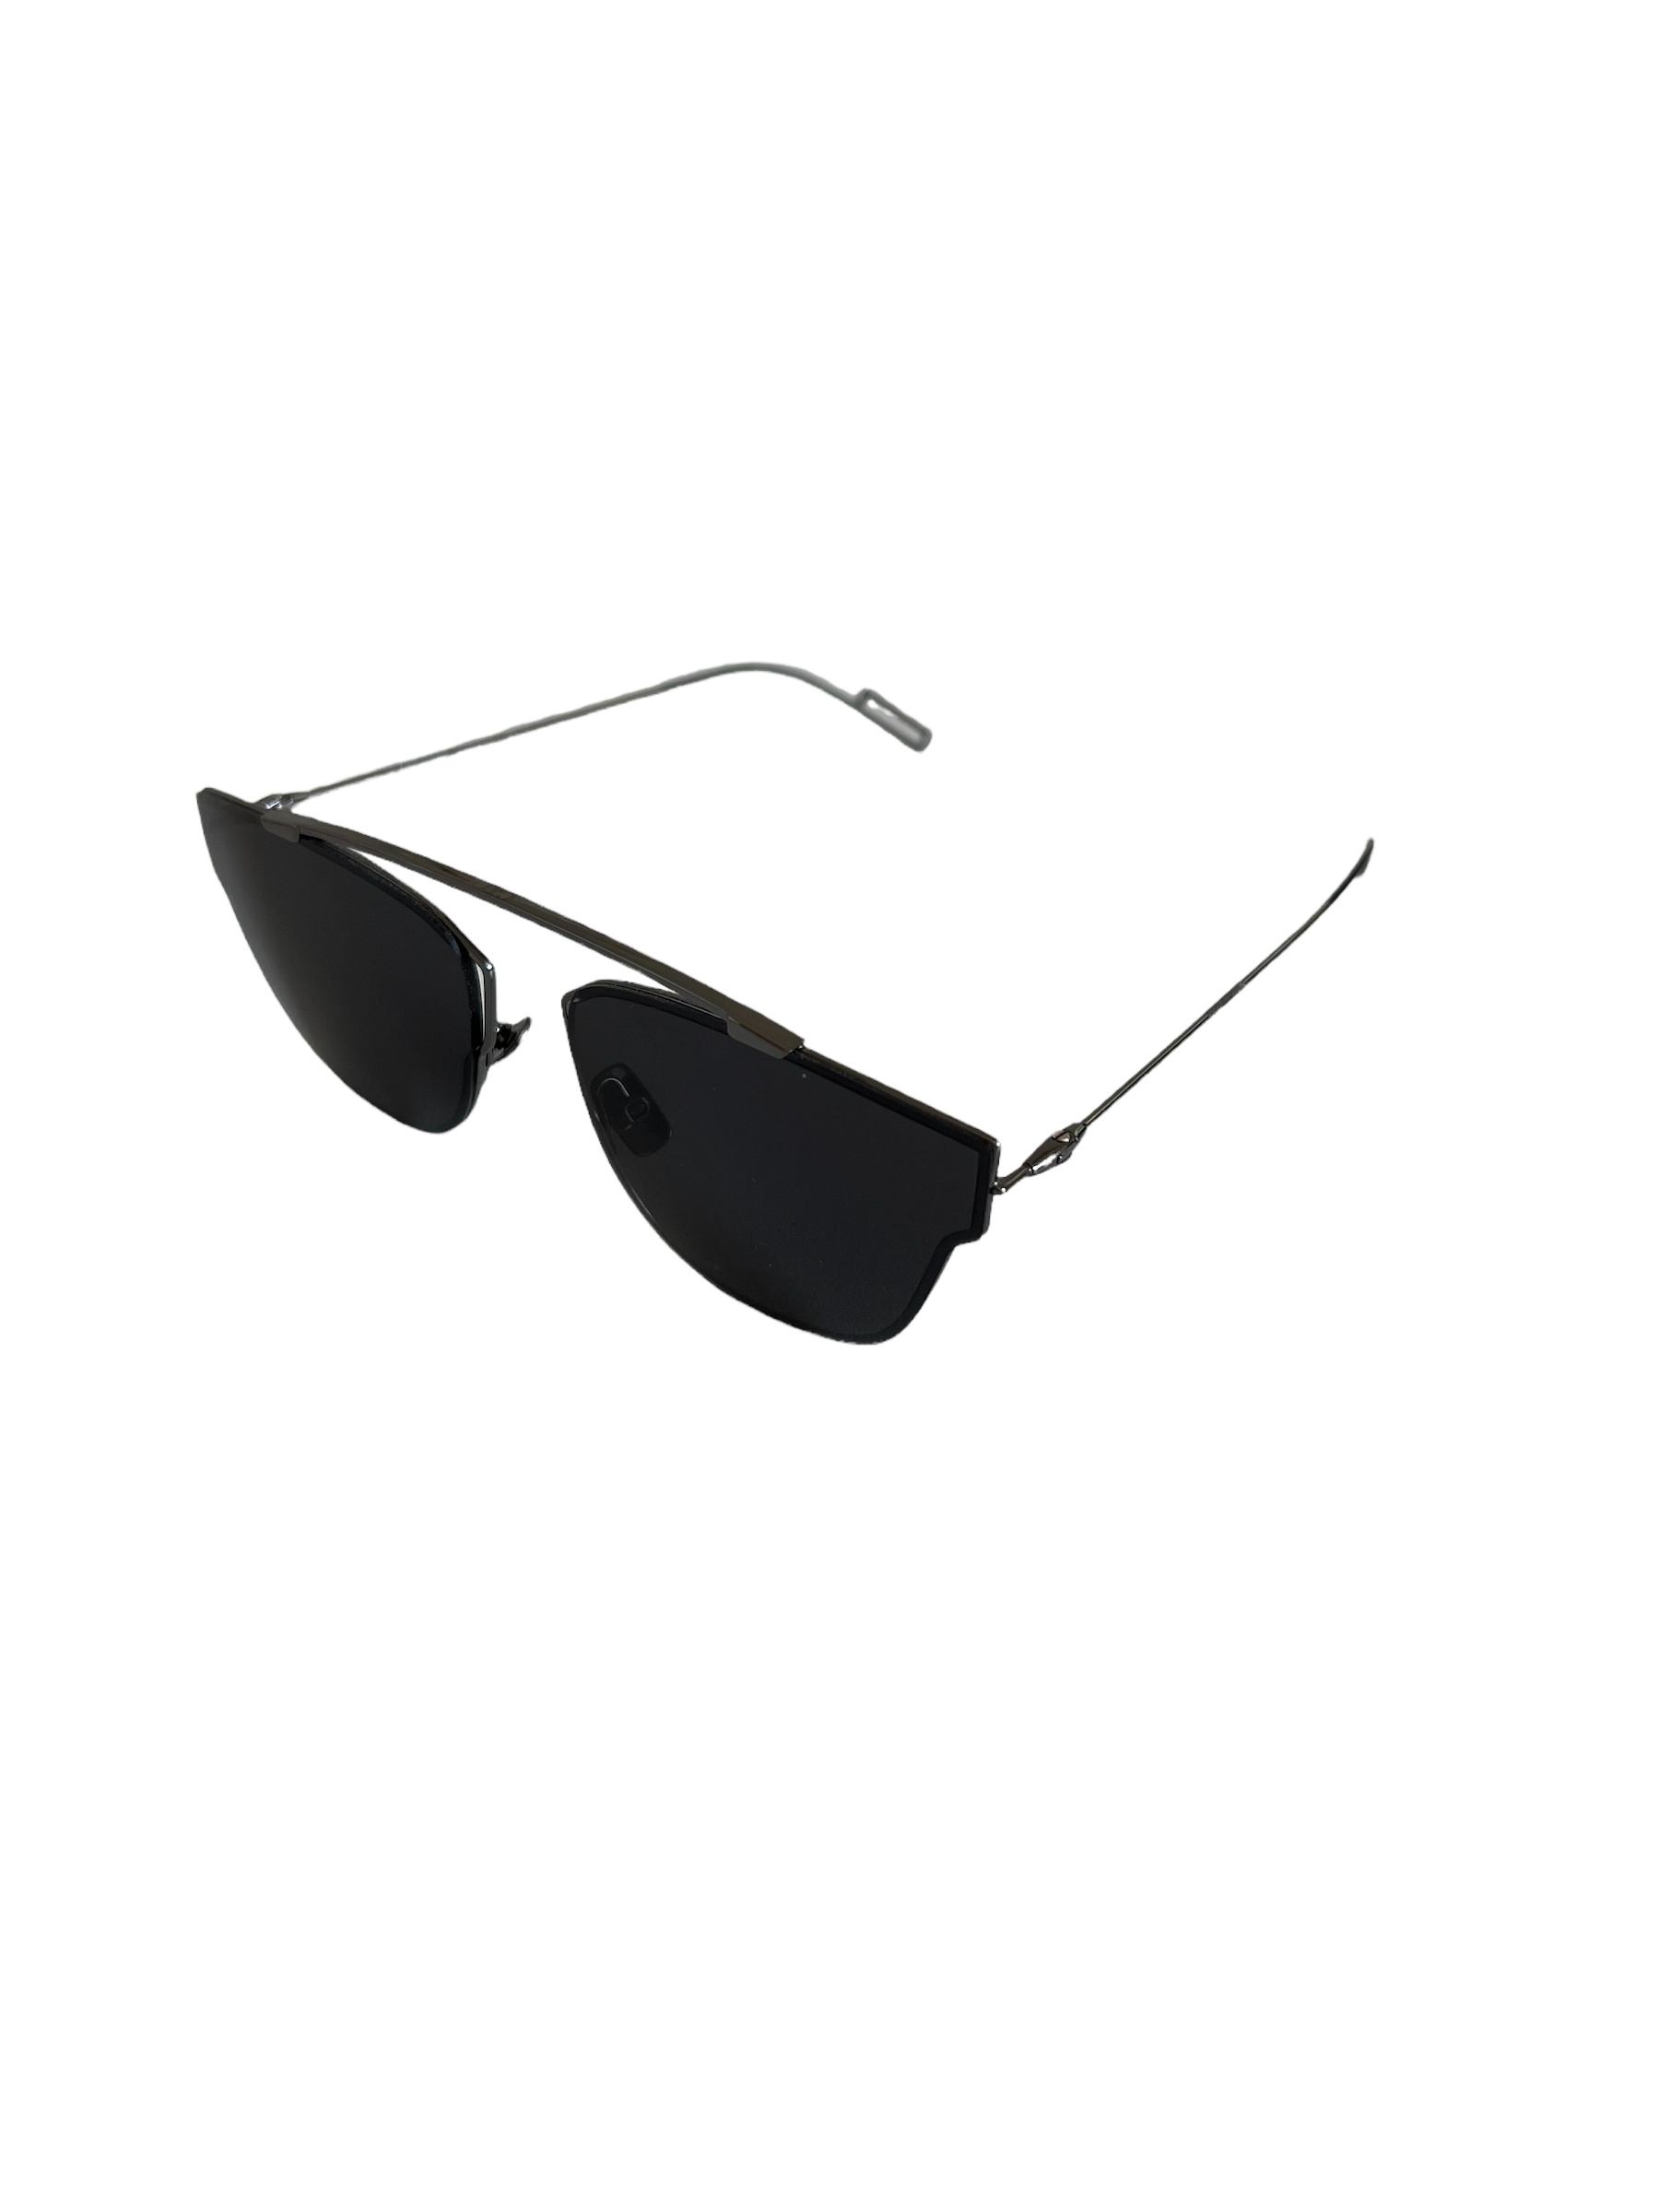 Dior Sunglasses minimalistic